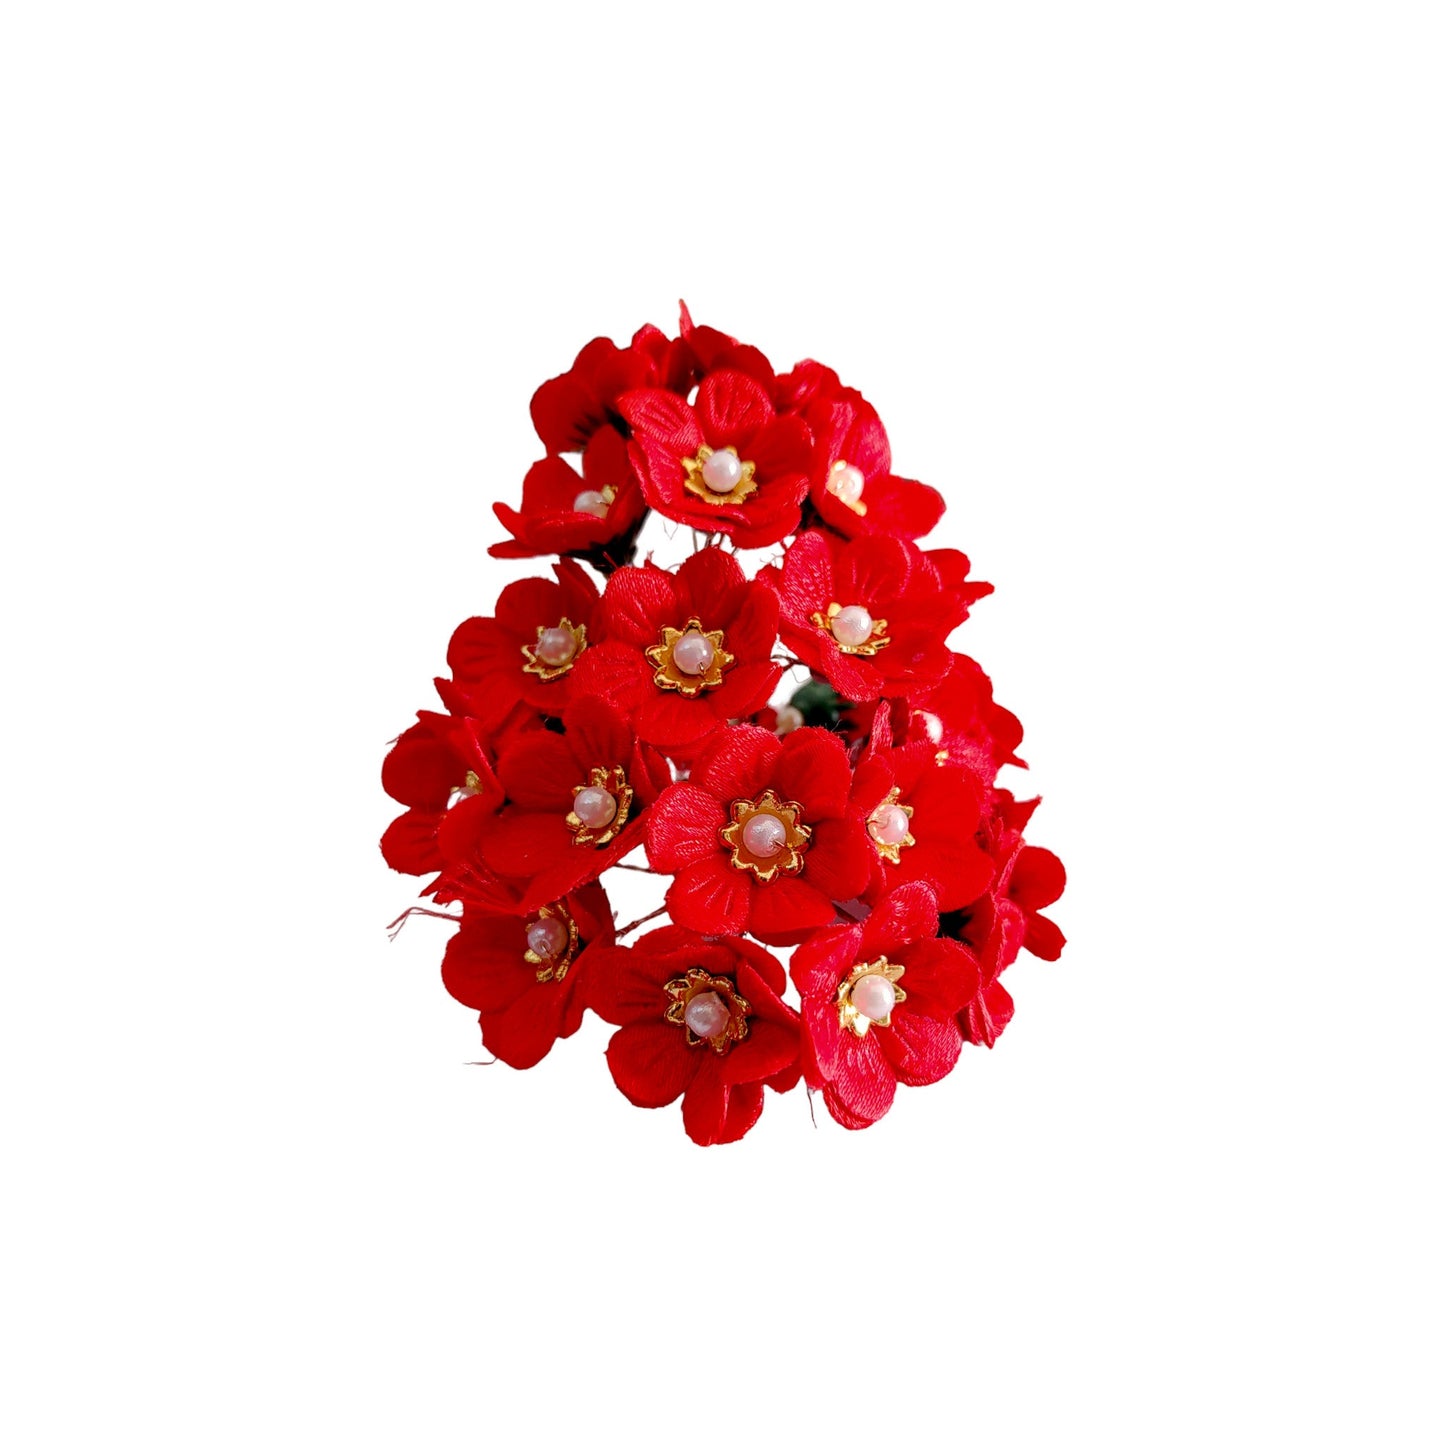 Decorative Artificial Primrose Fabric Flower for Decor, Craft or Textile, 60Pcs -11134, Red